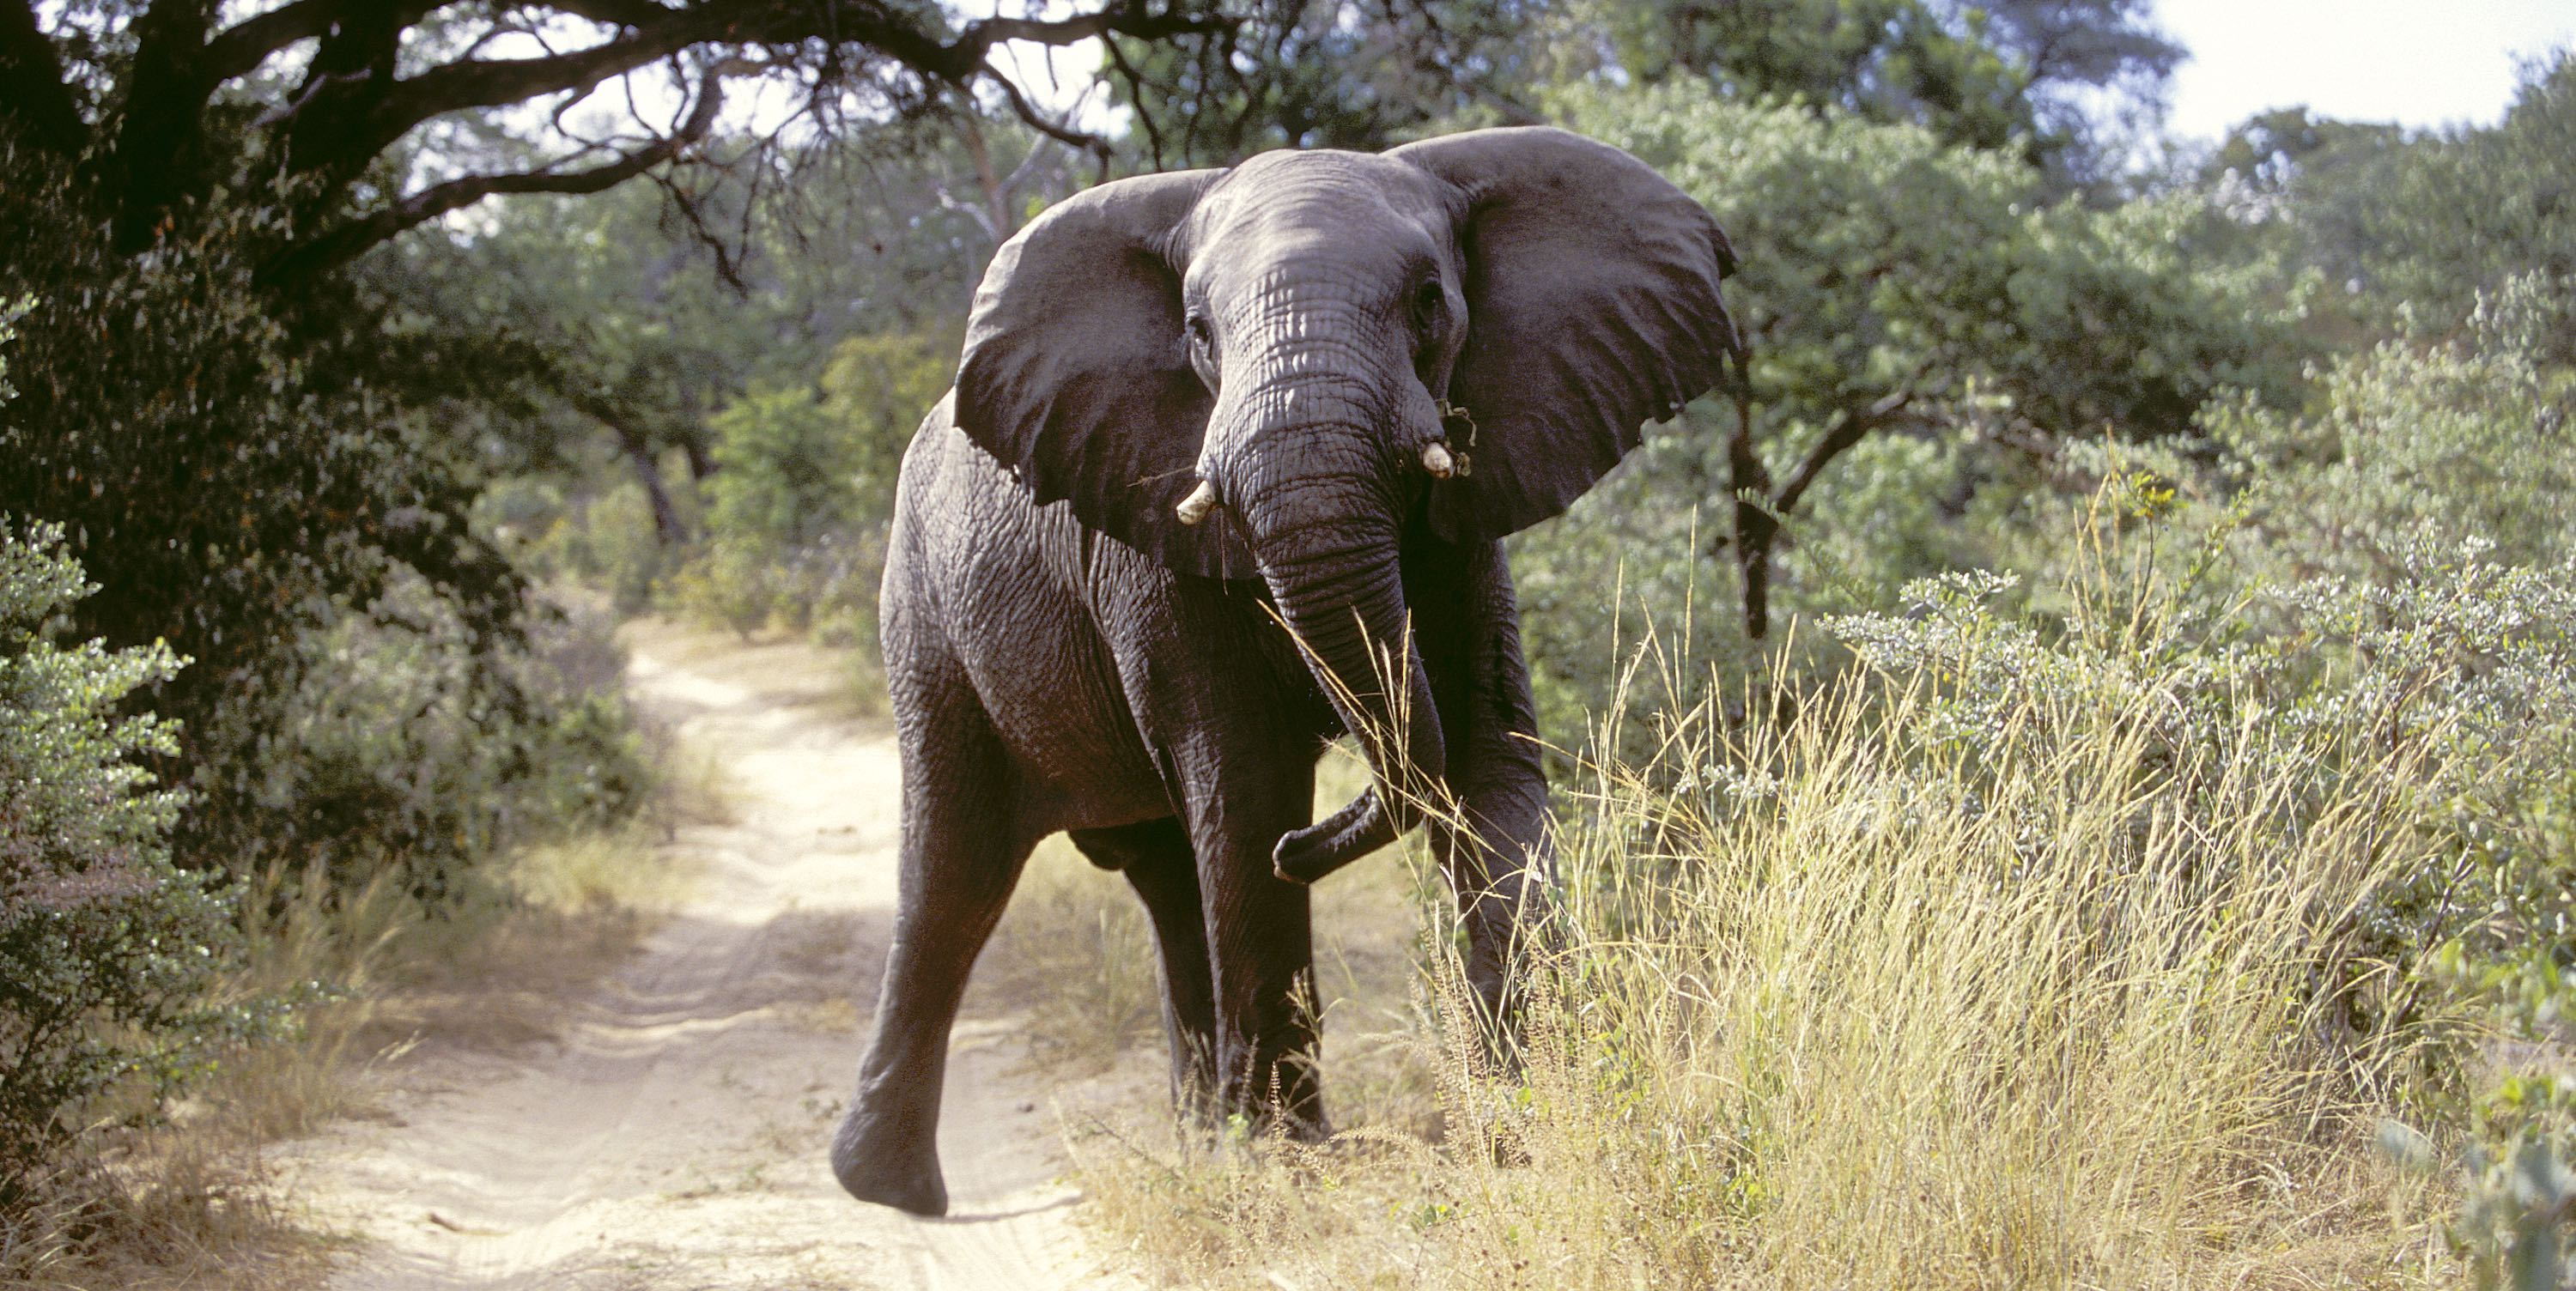 An elephant on a dirt road.